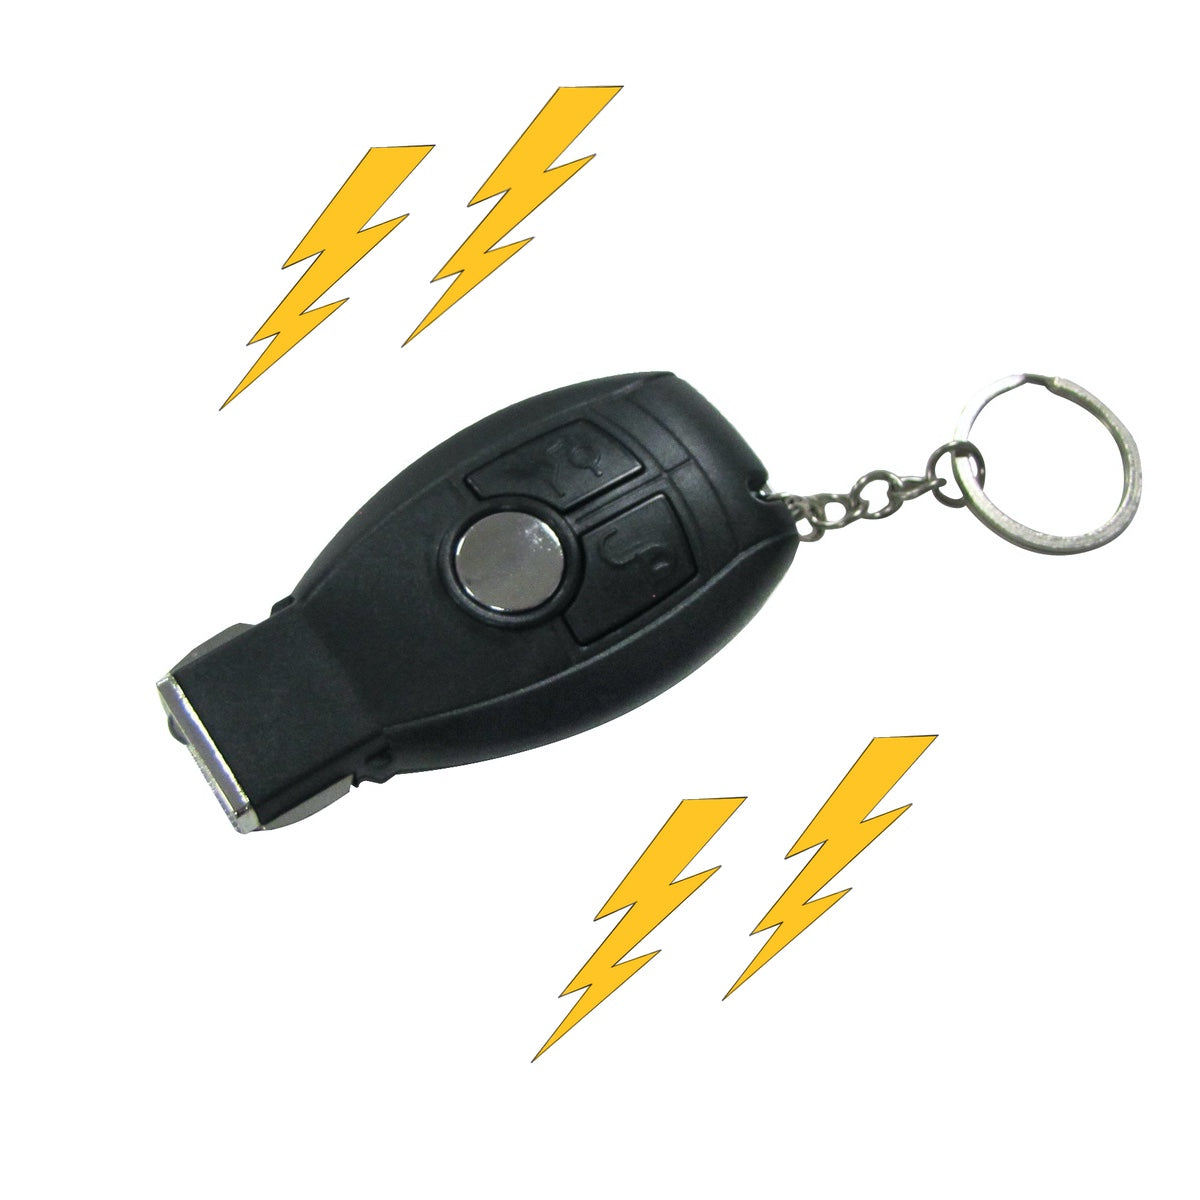 Novelty Car Keyring Shock Key Ring Fob Practical Joke Flashlight Gag G